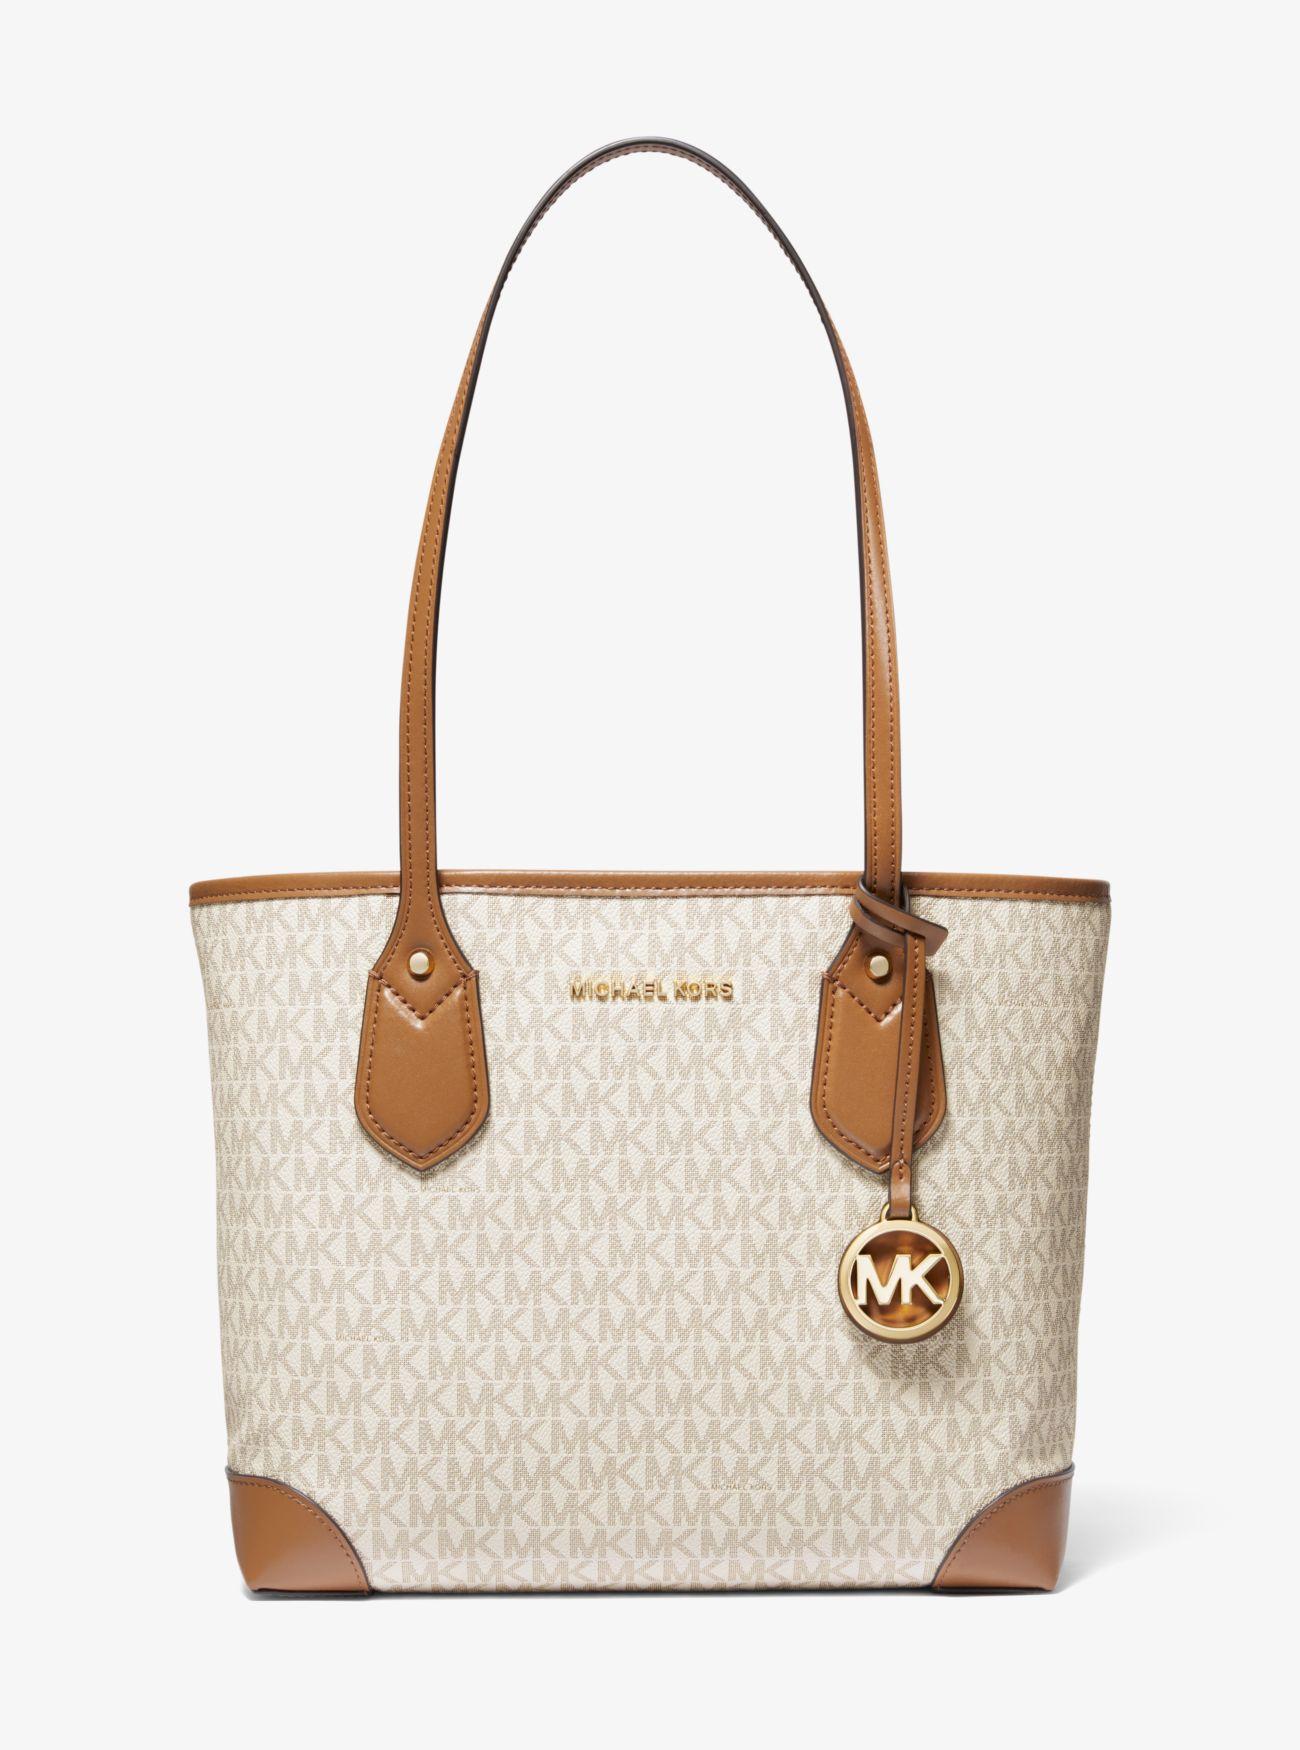 MK small tote bag